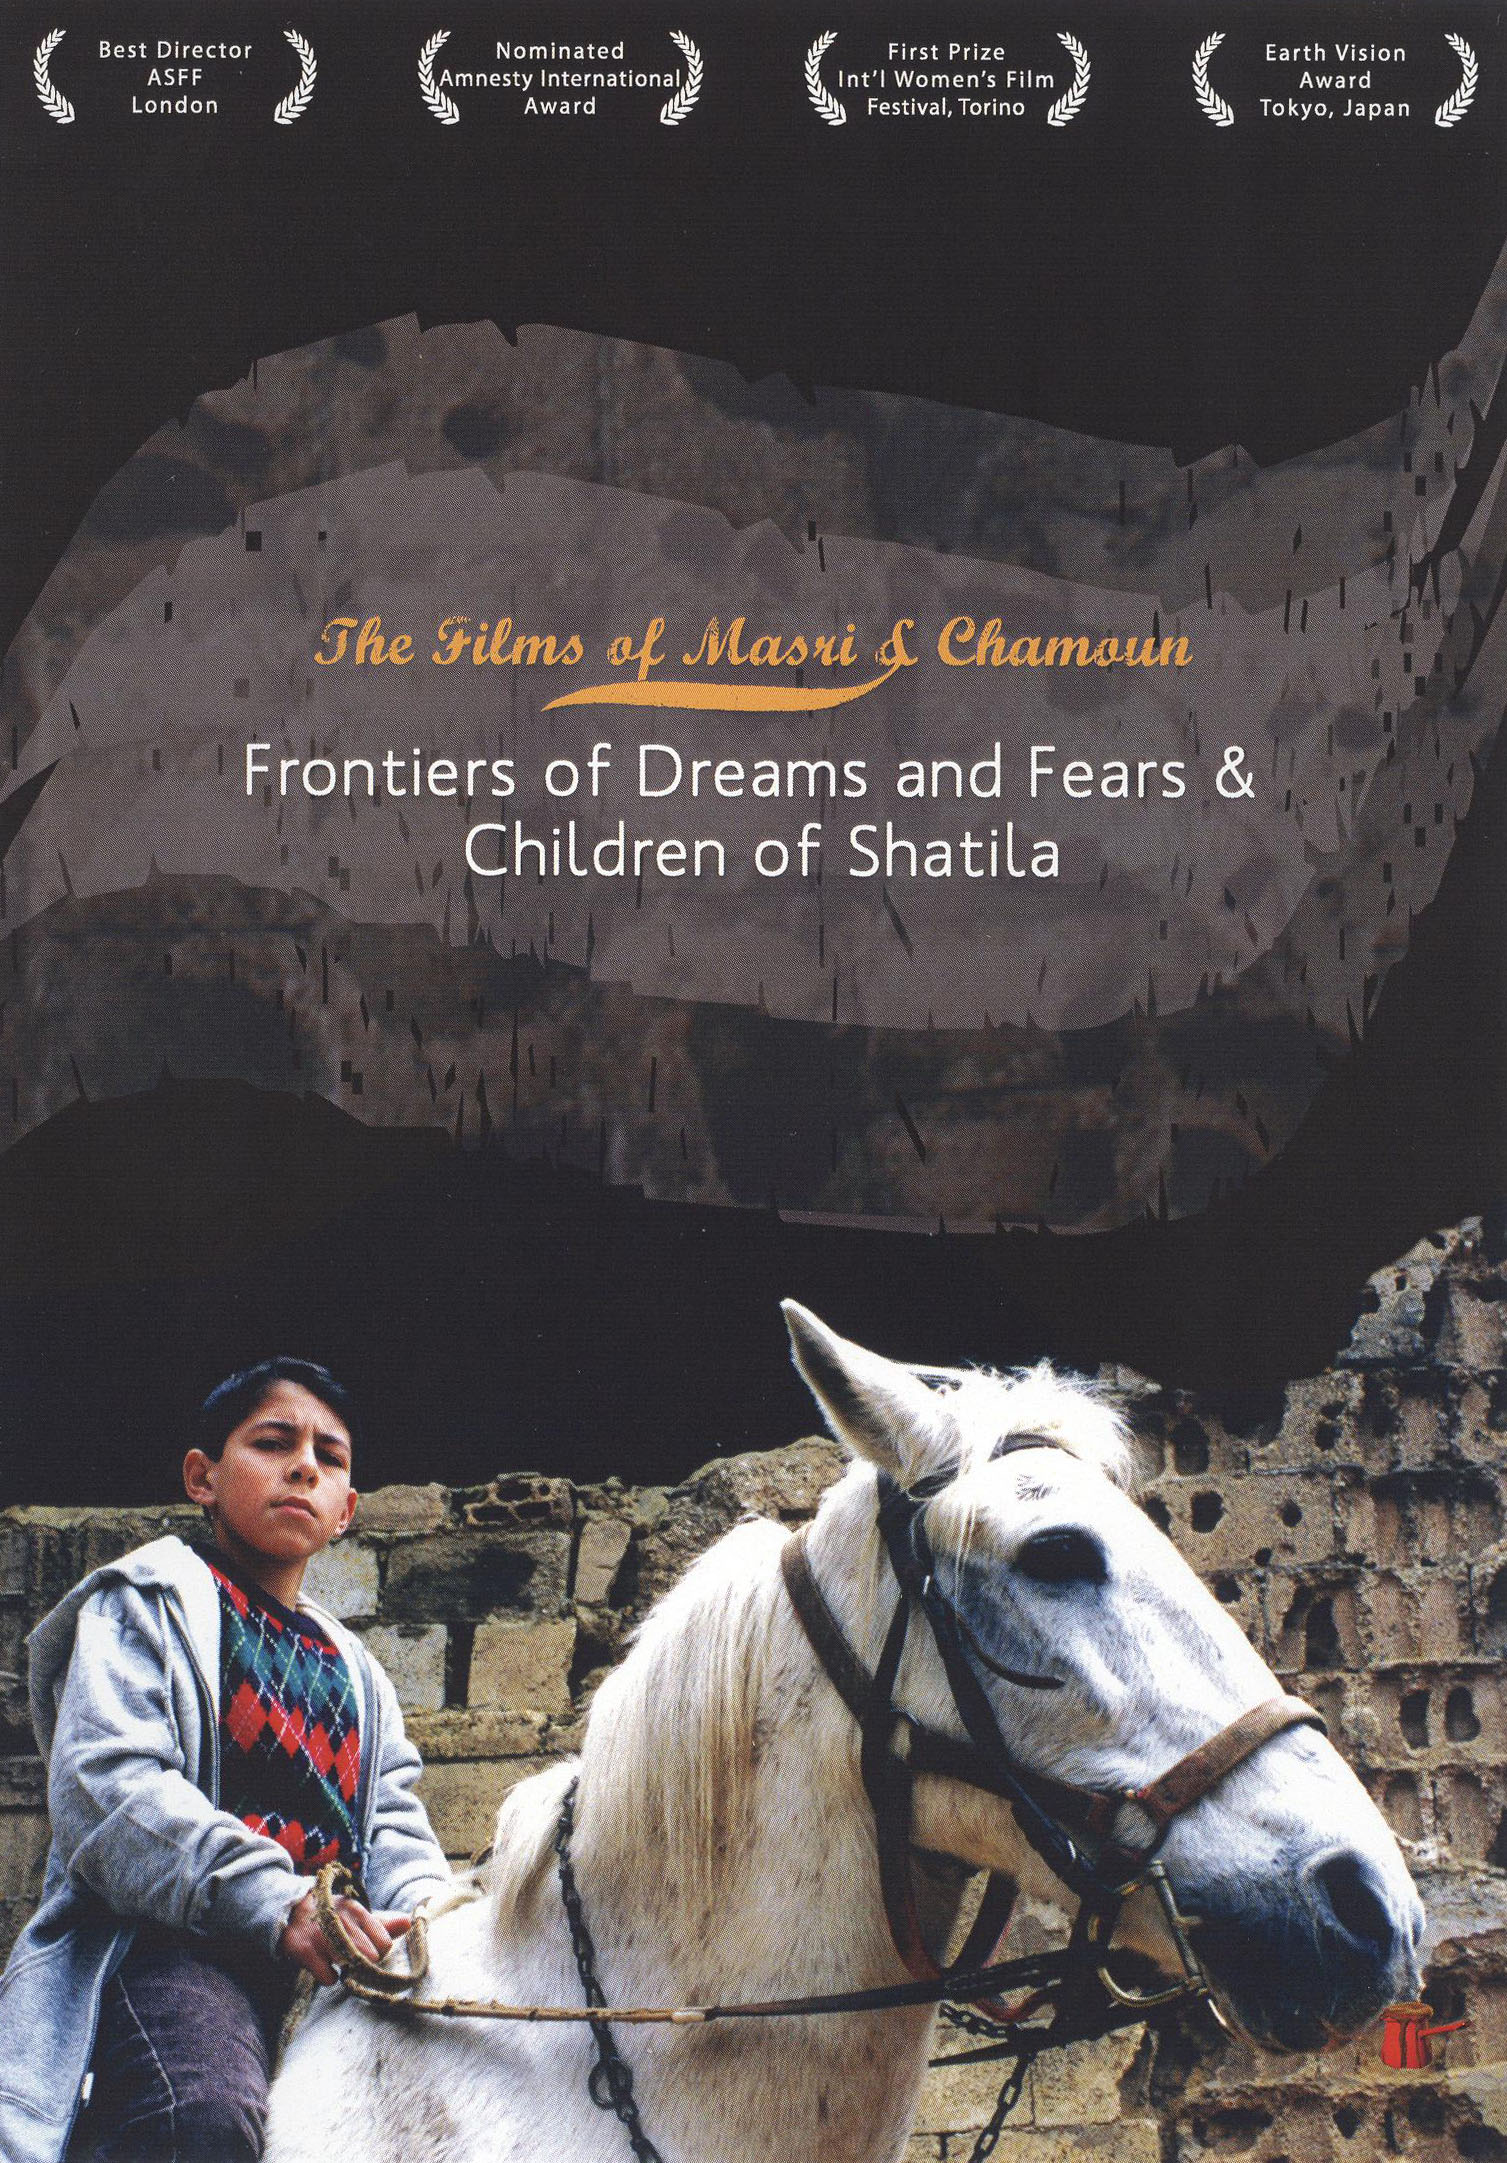 Chidren of Shatila (1998)